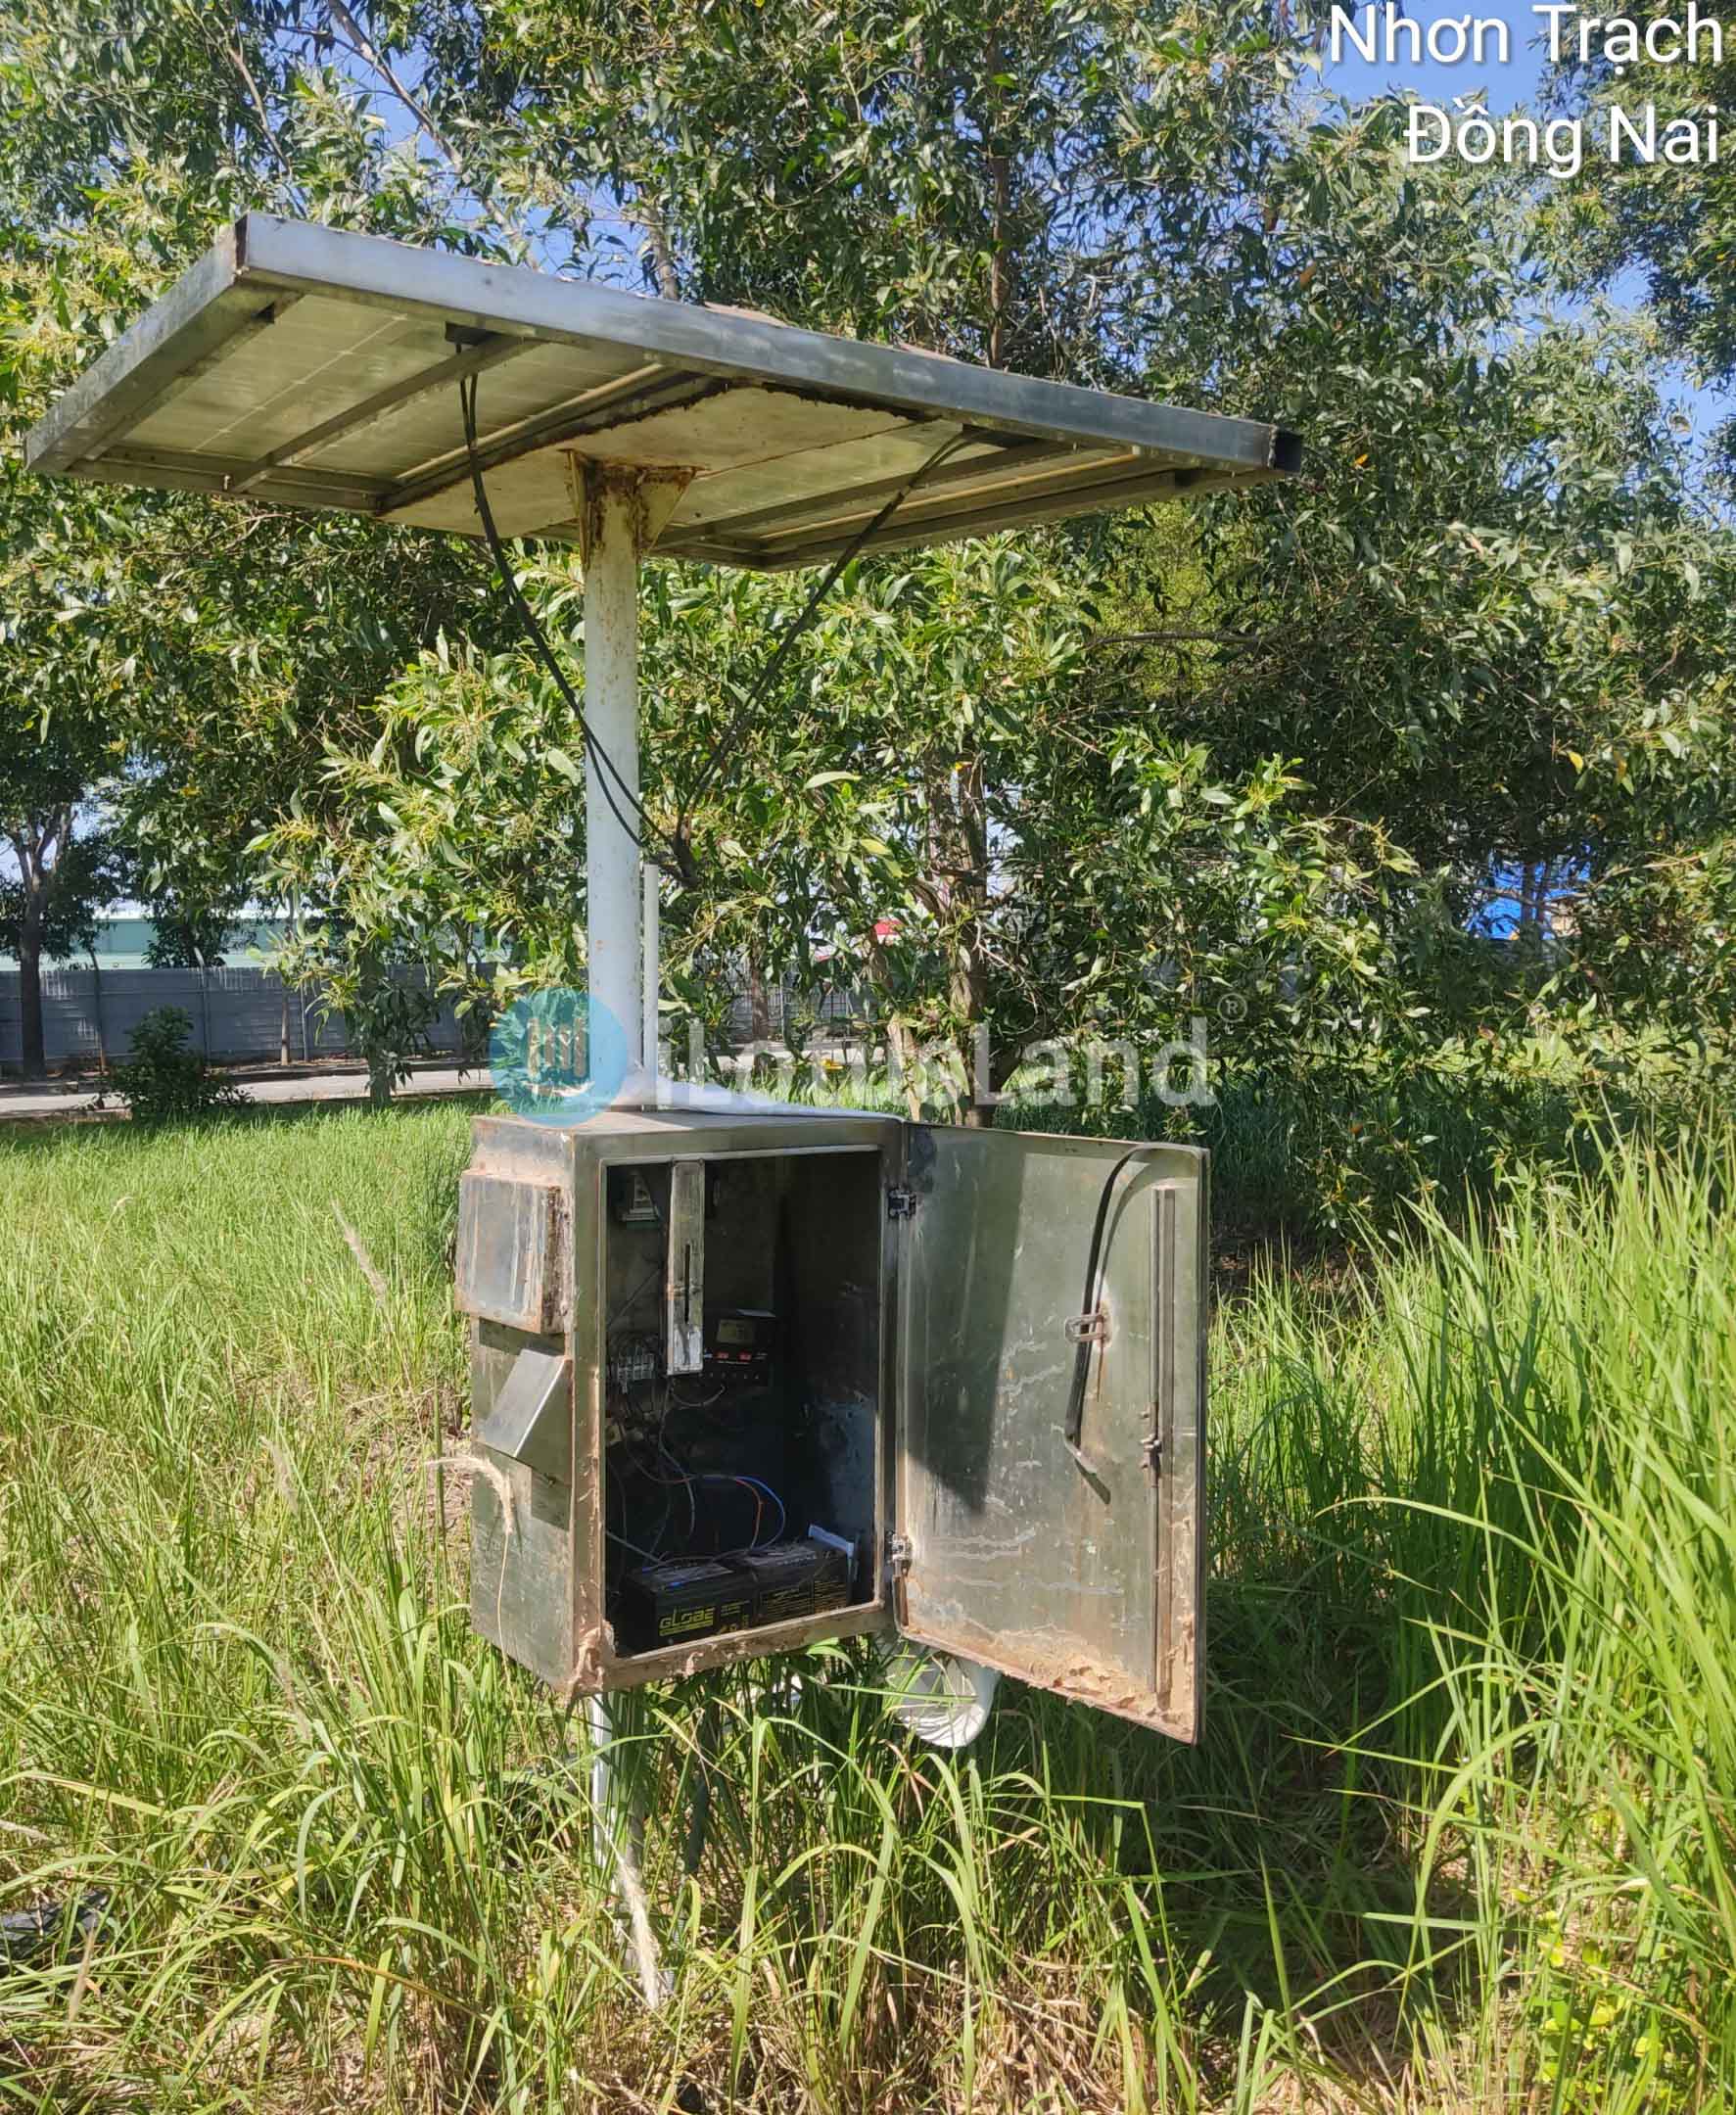 Monitoring station Nhon Trach 1